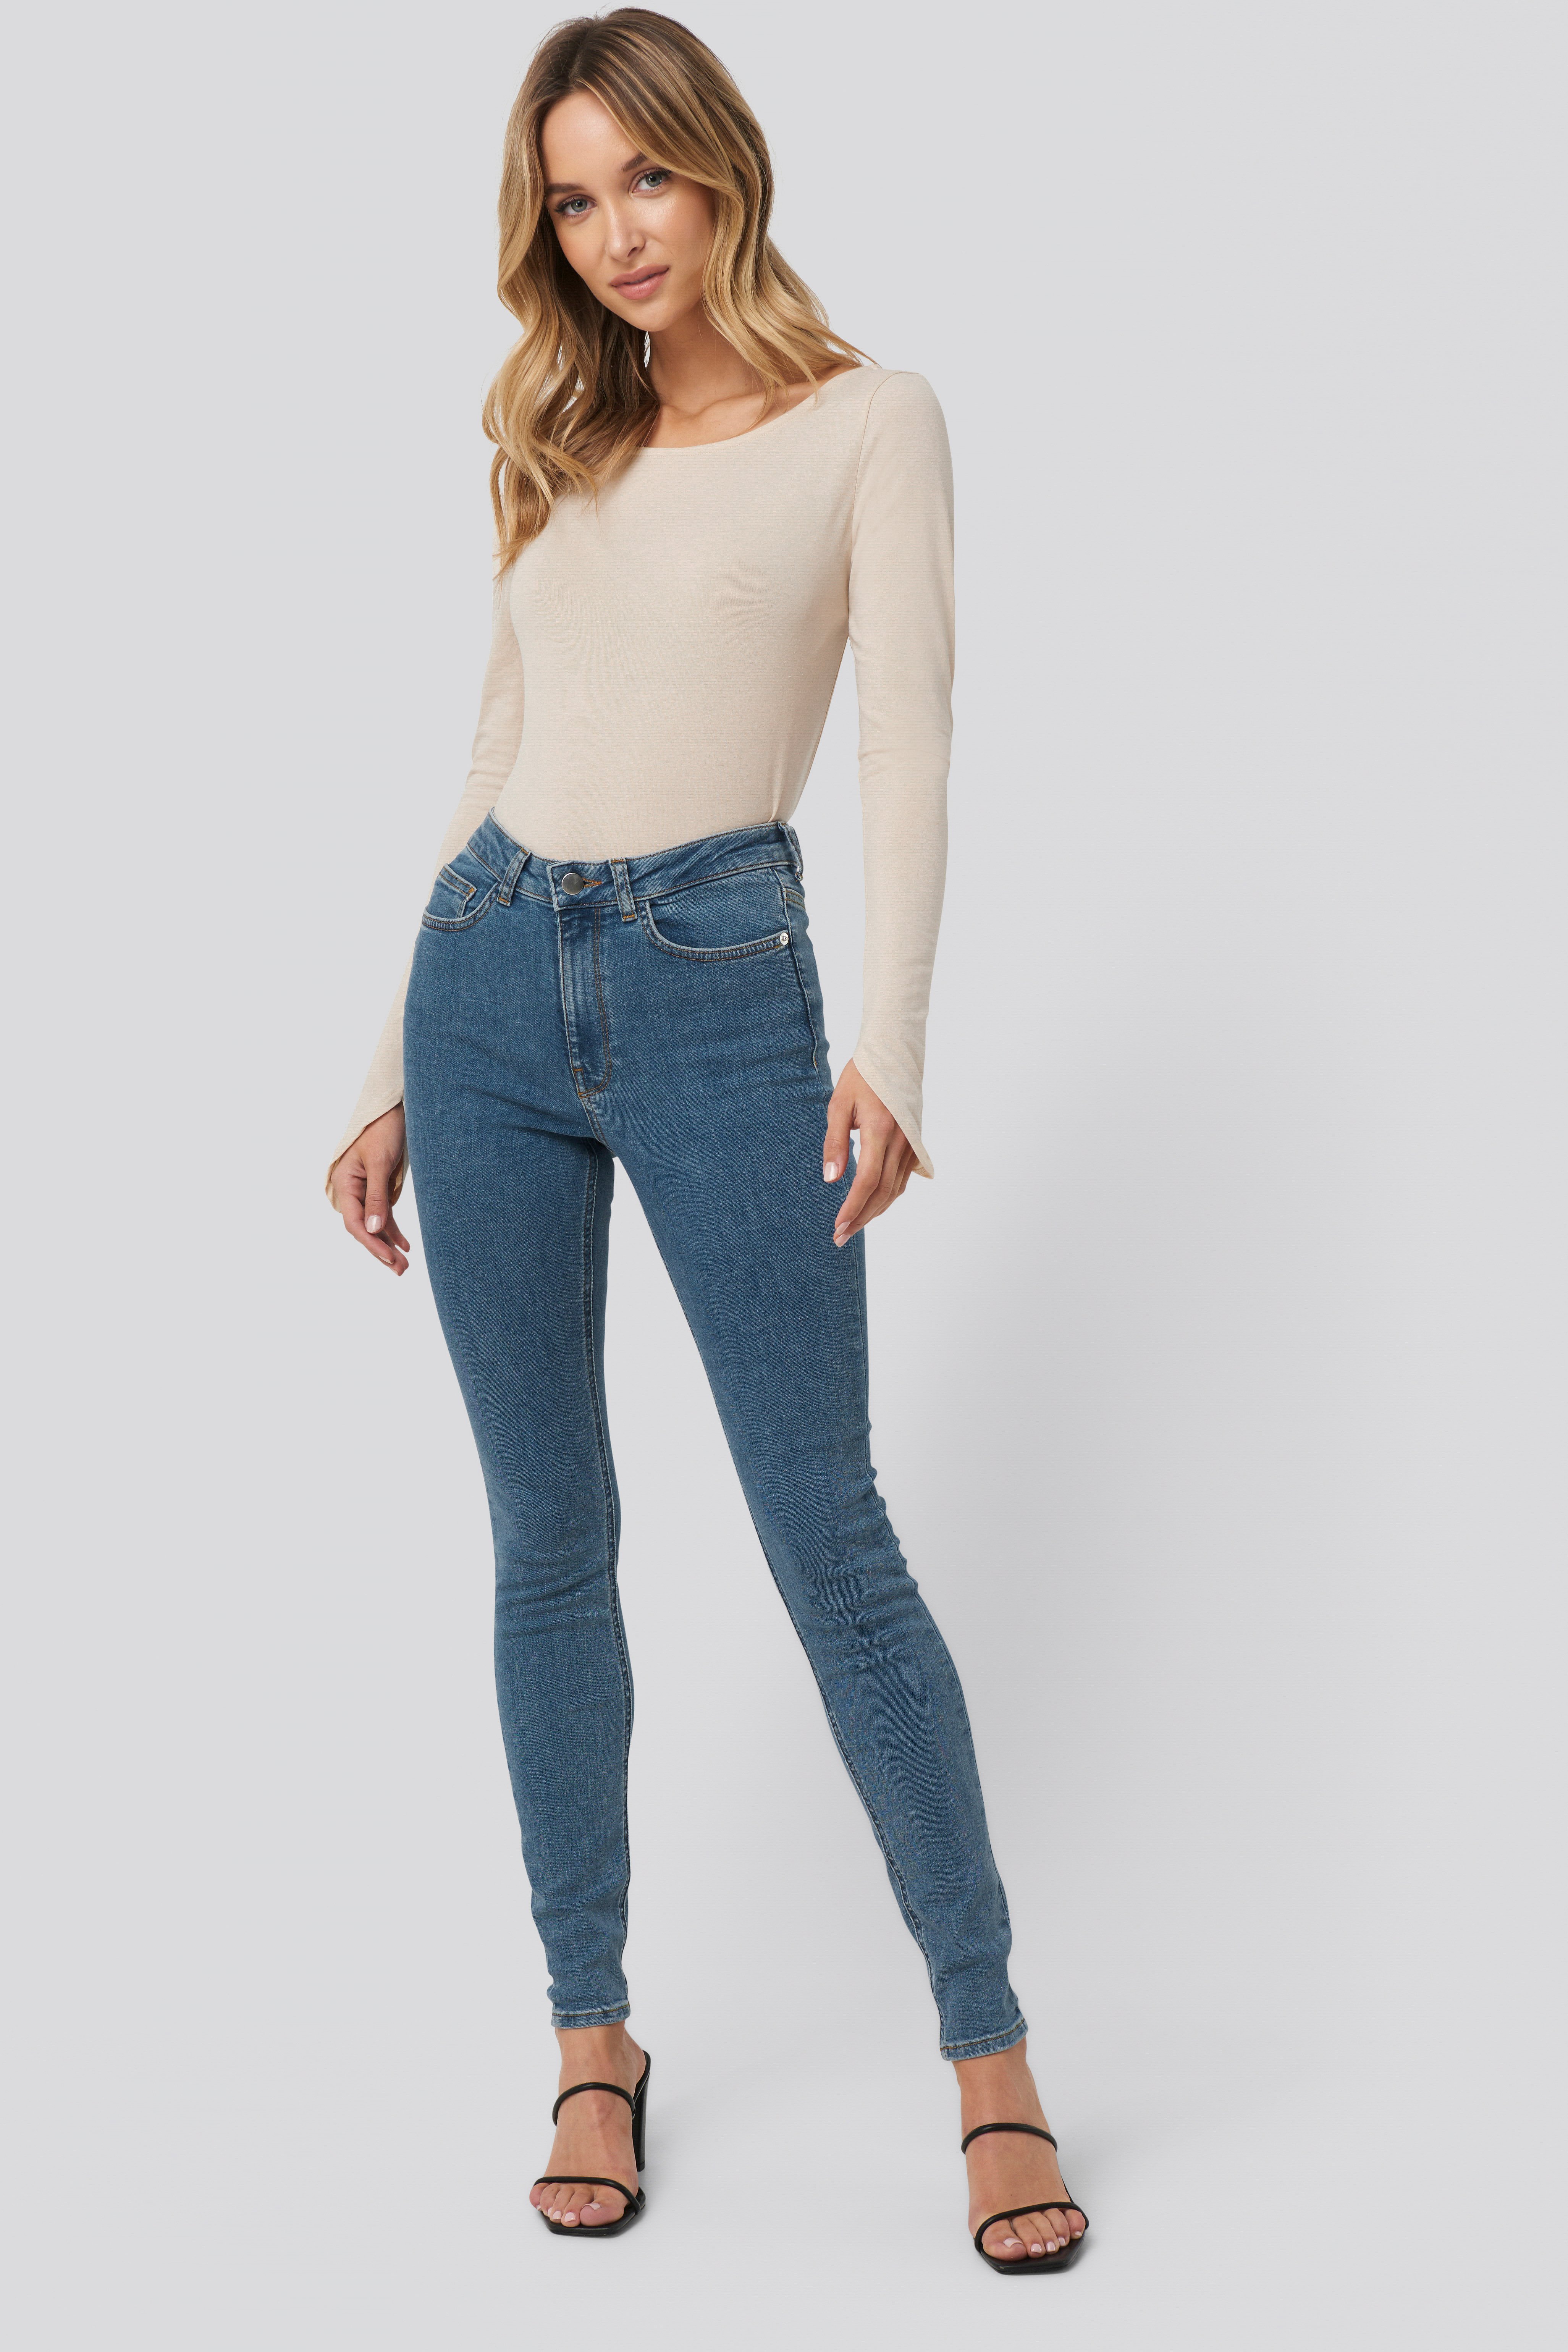 Pamela x NA-KD Reborn Recycled High Waist Skinny Fit Jeans - Blue